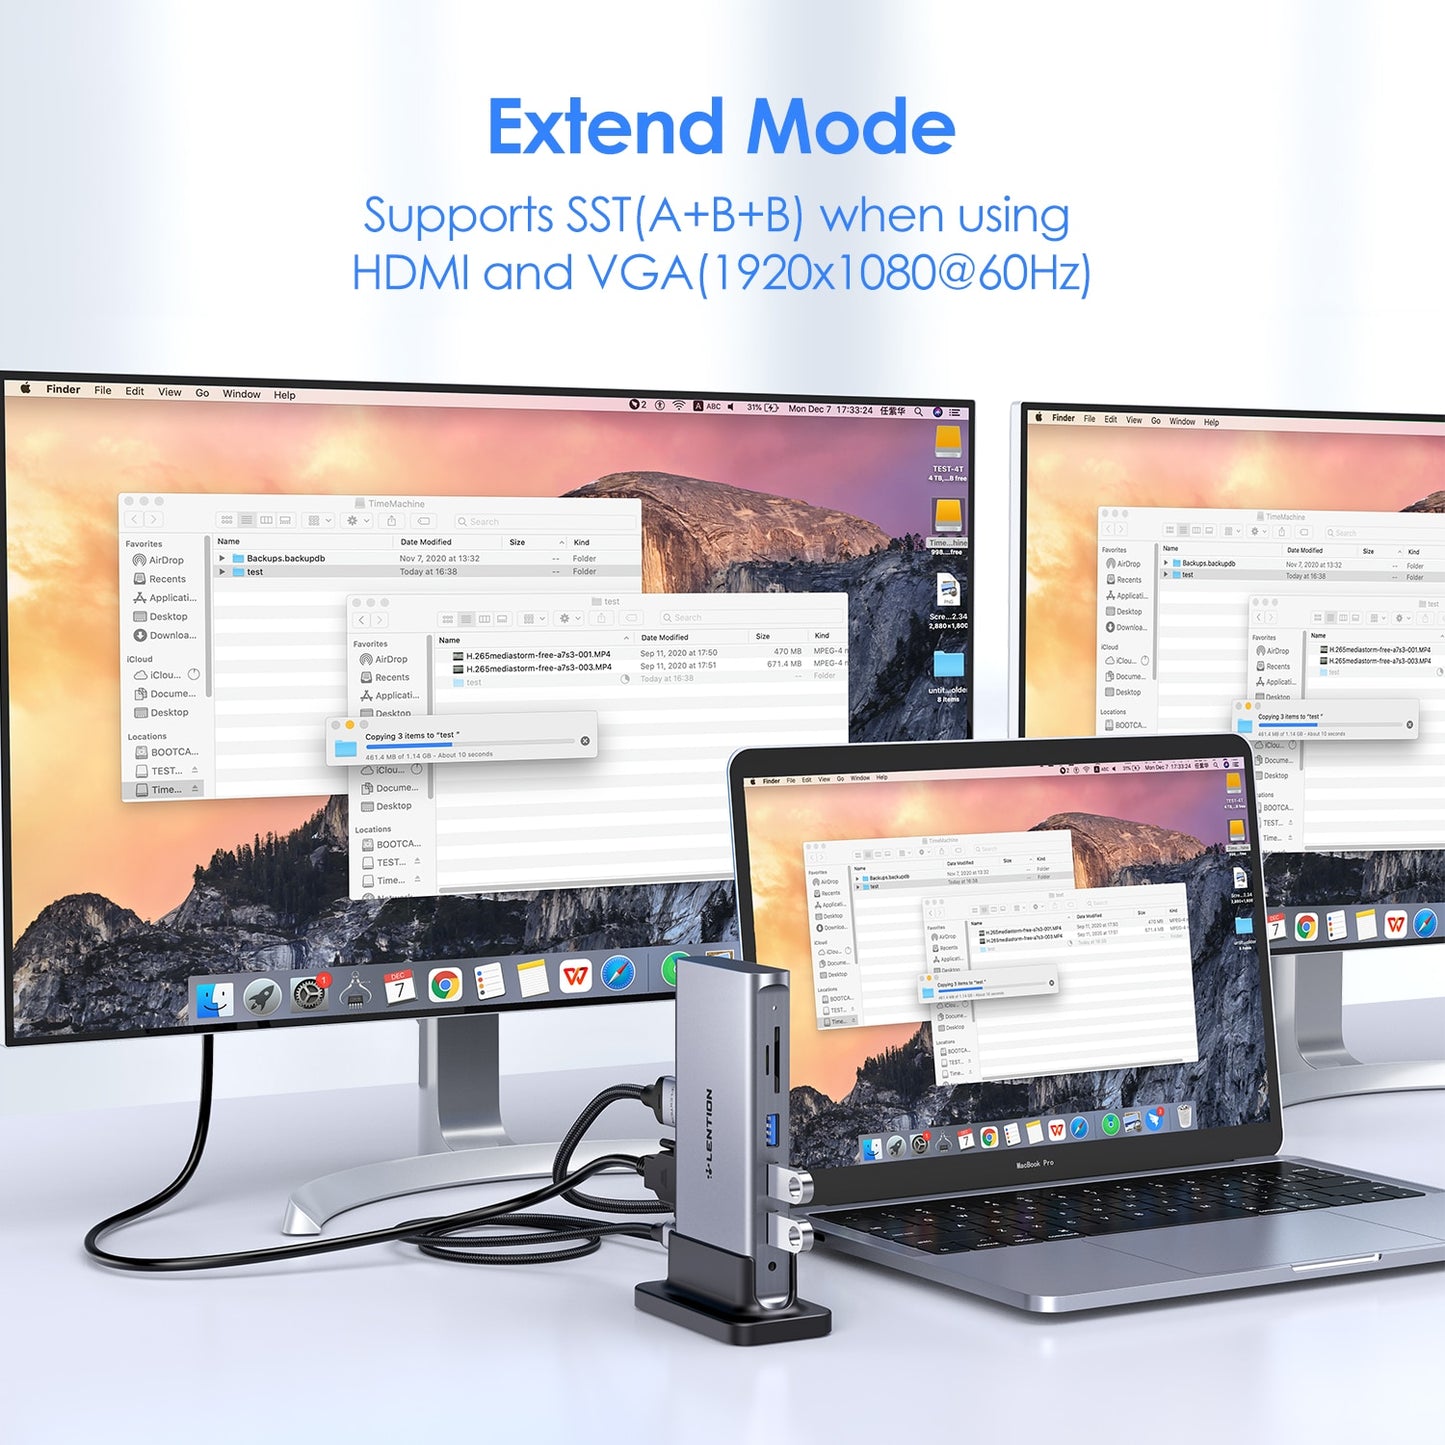 Lention USB C HUB 4K HDMI 60Hz PD VGA USB 3.0 2.0 Docking Station TypeC for MacBook Pro Air M2 M1/Surface Dock Splitter - kmtell.com